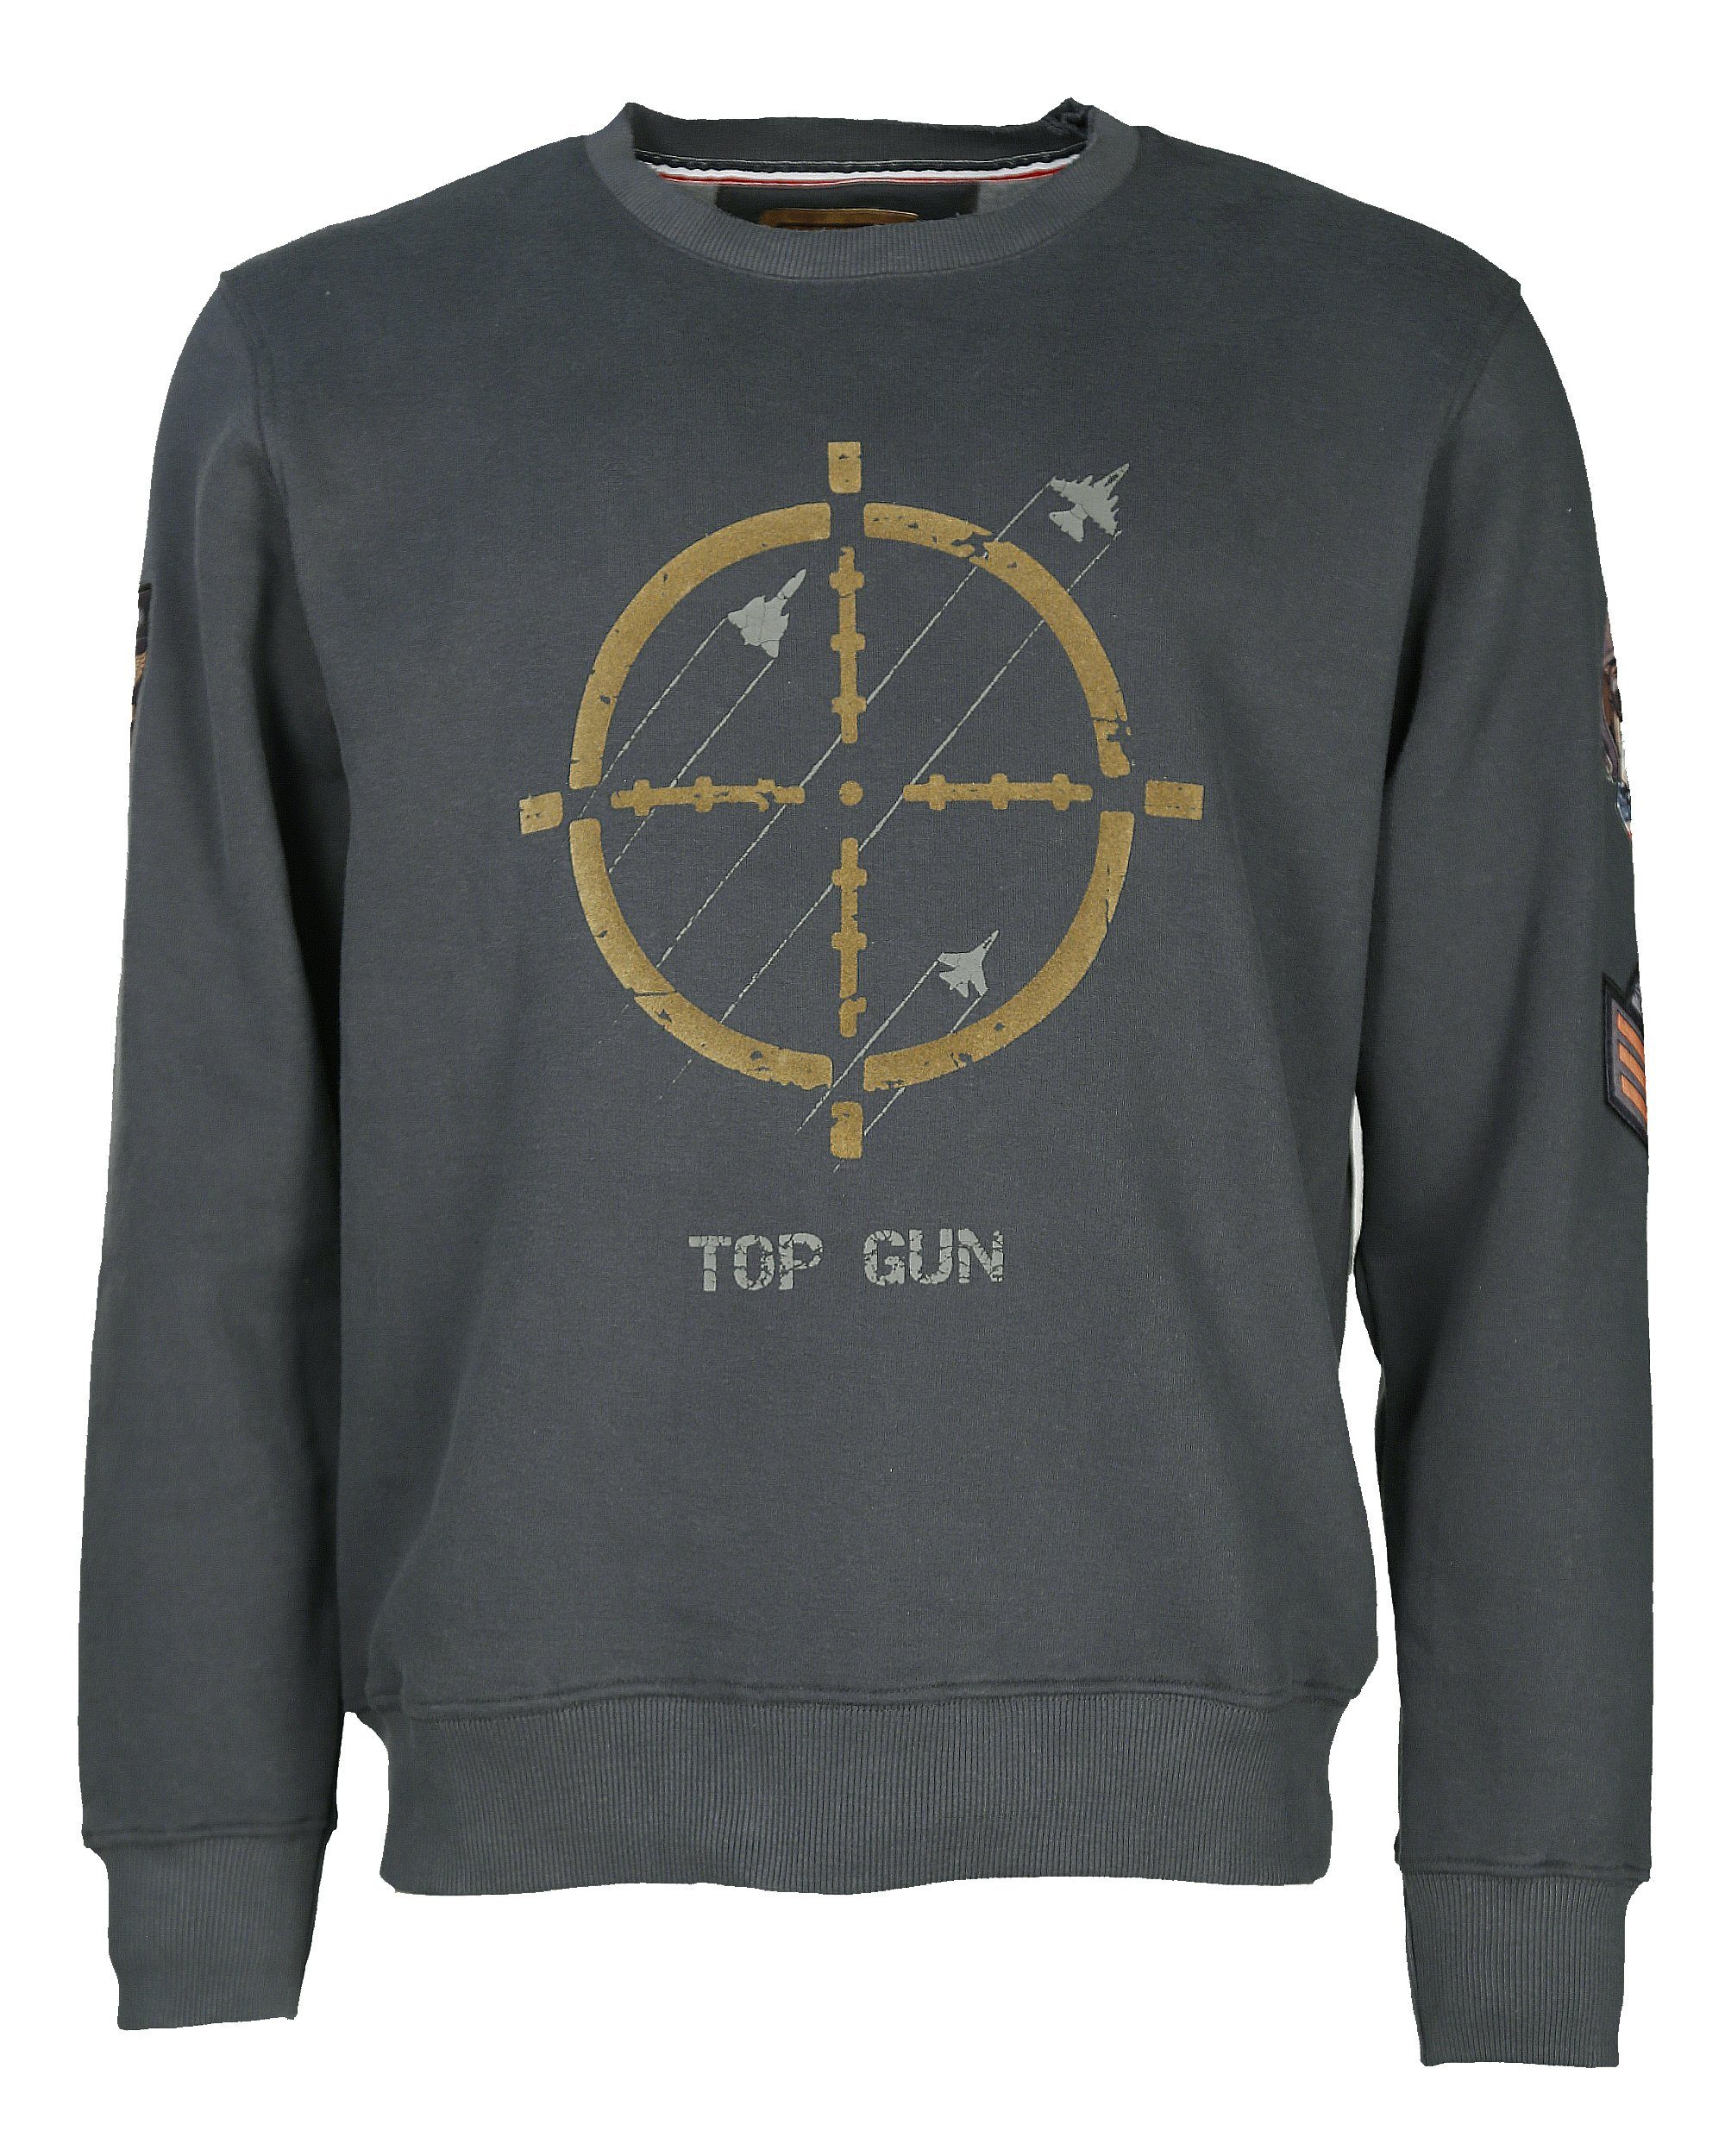 Target GUN TG20191028 Sweatshirt TOP Disc